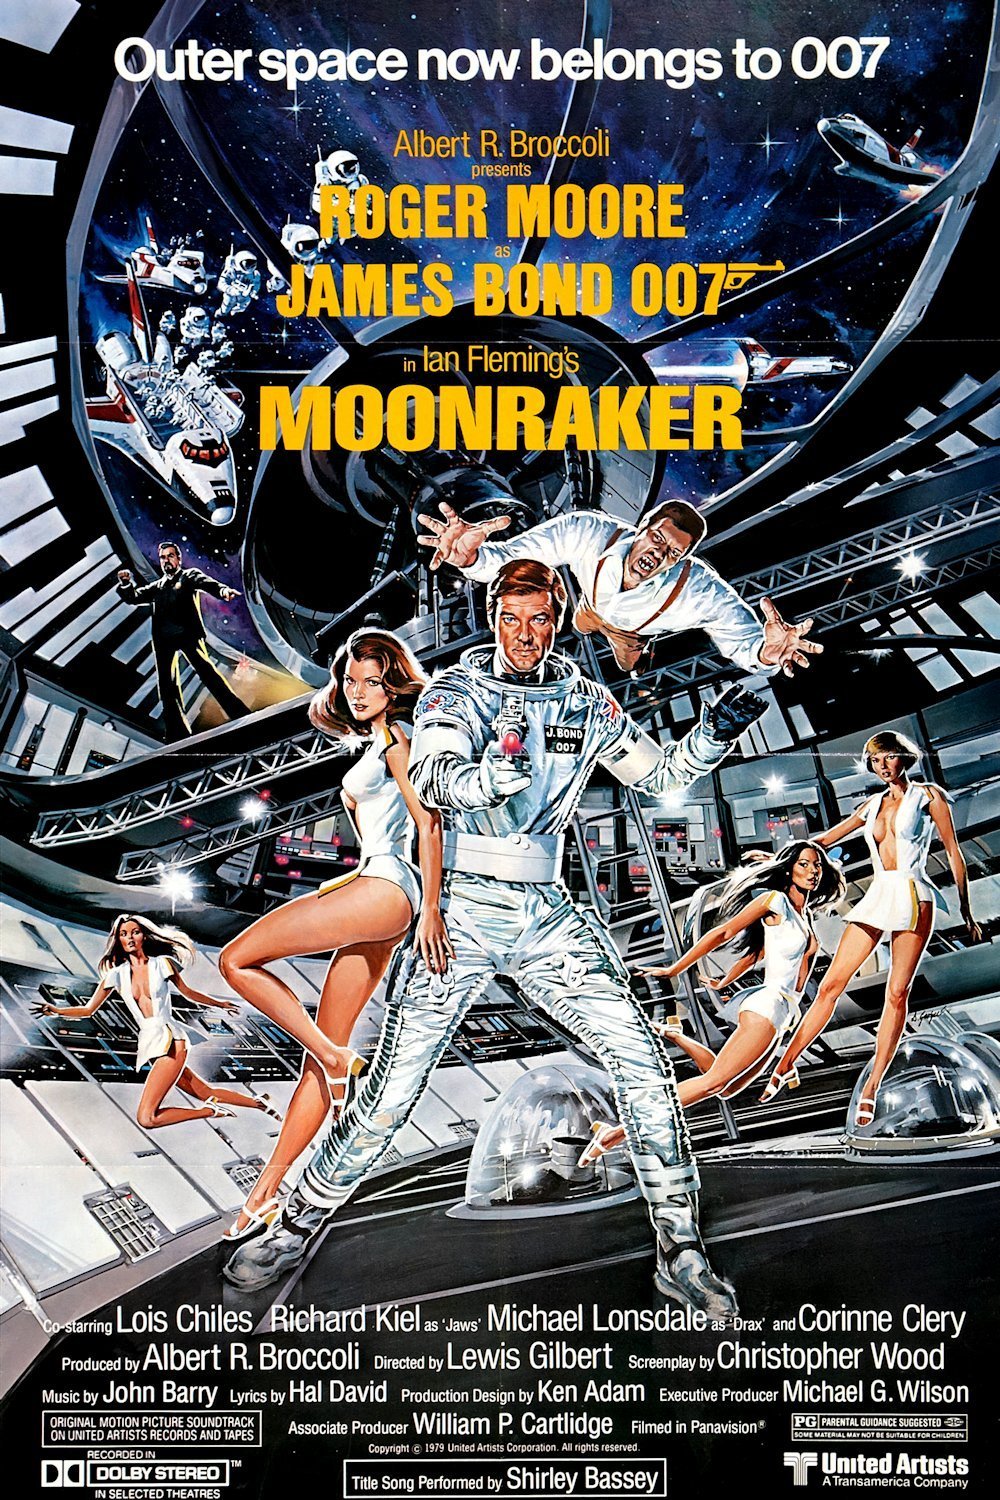 [好雷] 007 太空城 Moonraker (1979 英國片)